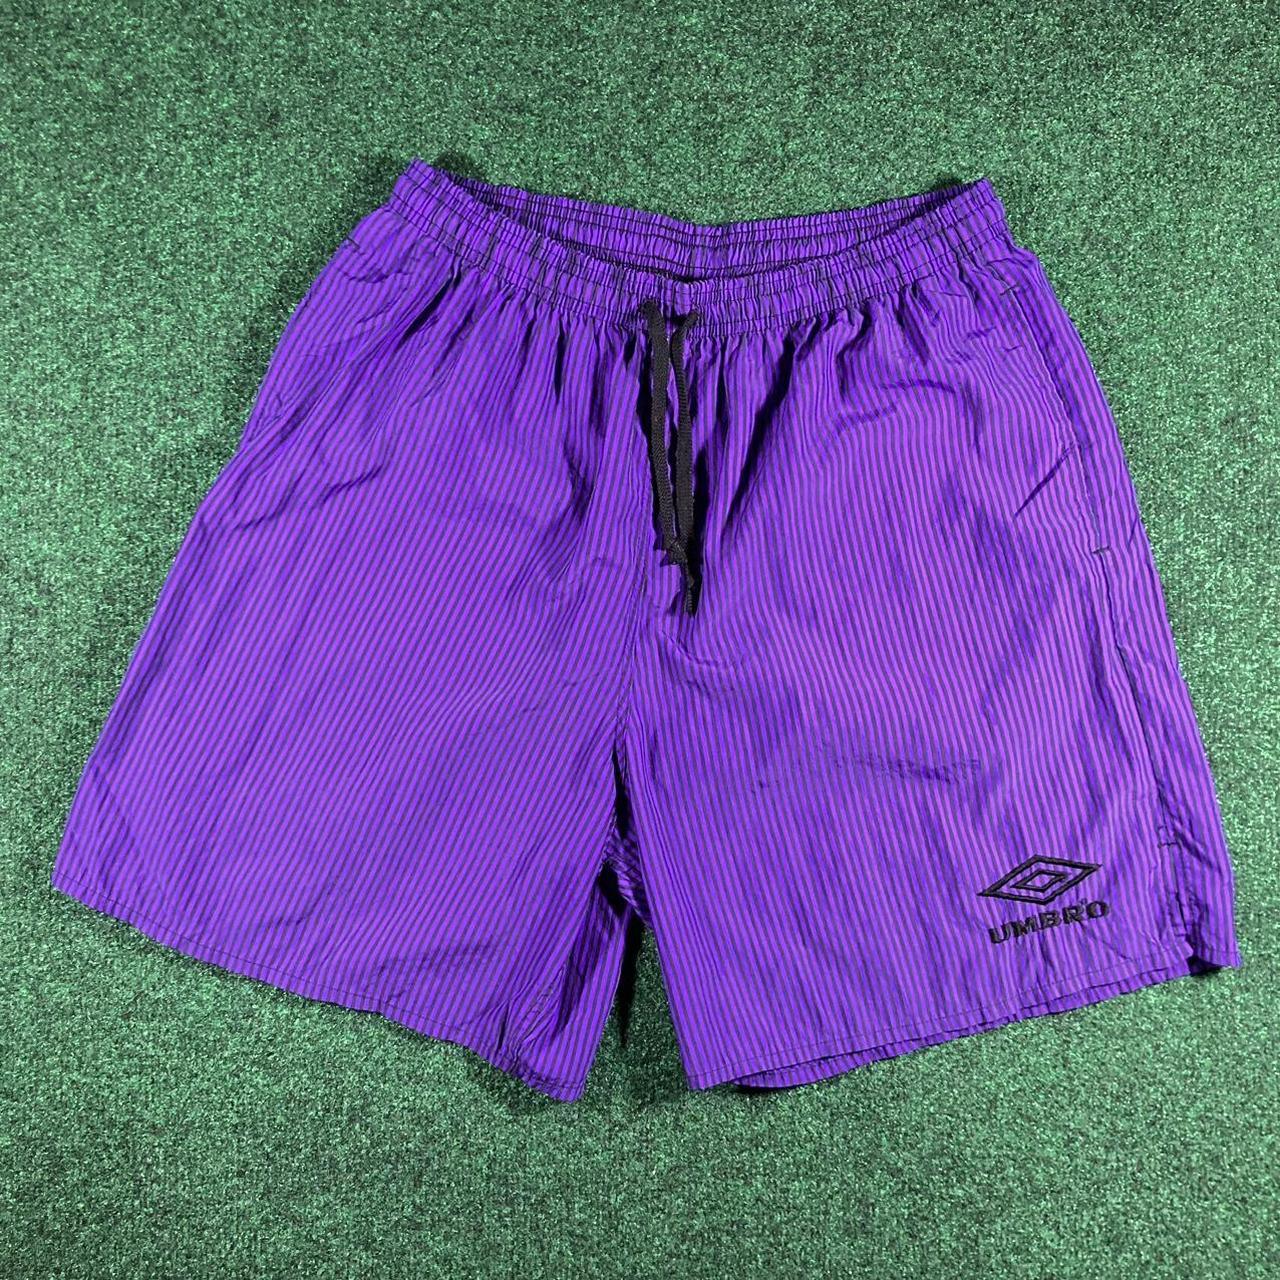 Vintage 90s Umbro Nylon Shorts Purple Striped Made... - Depop